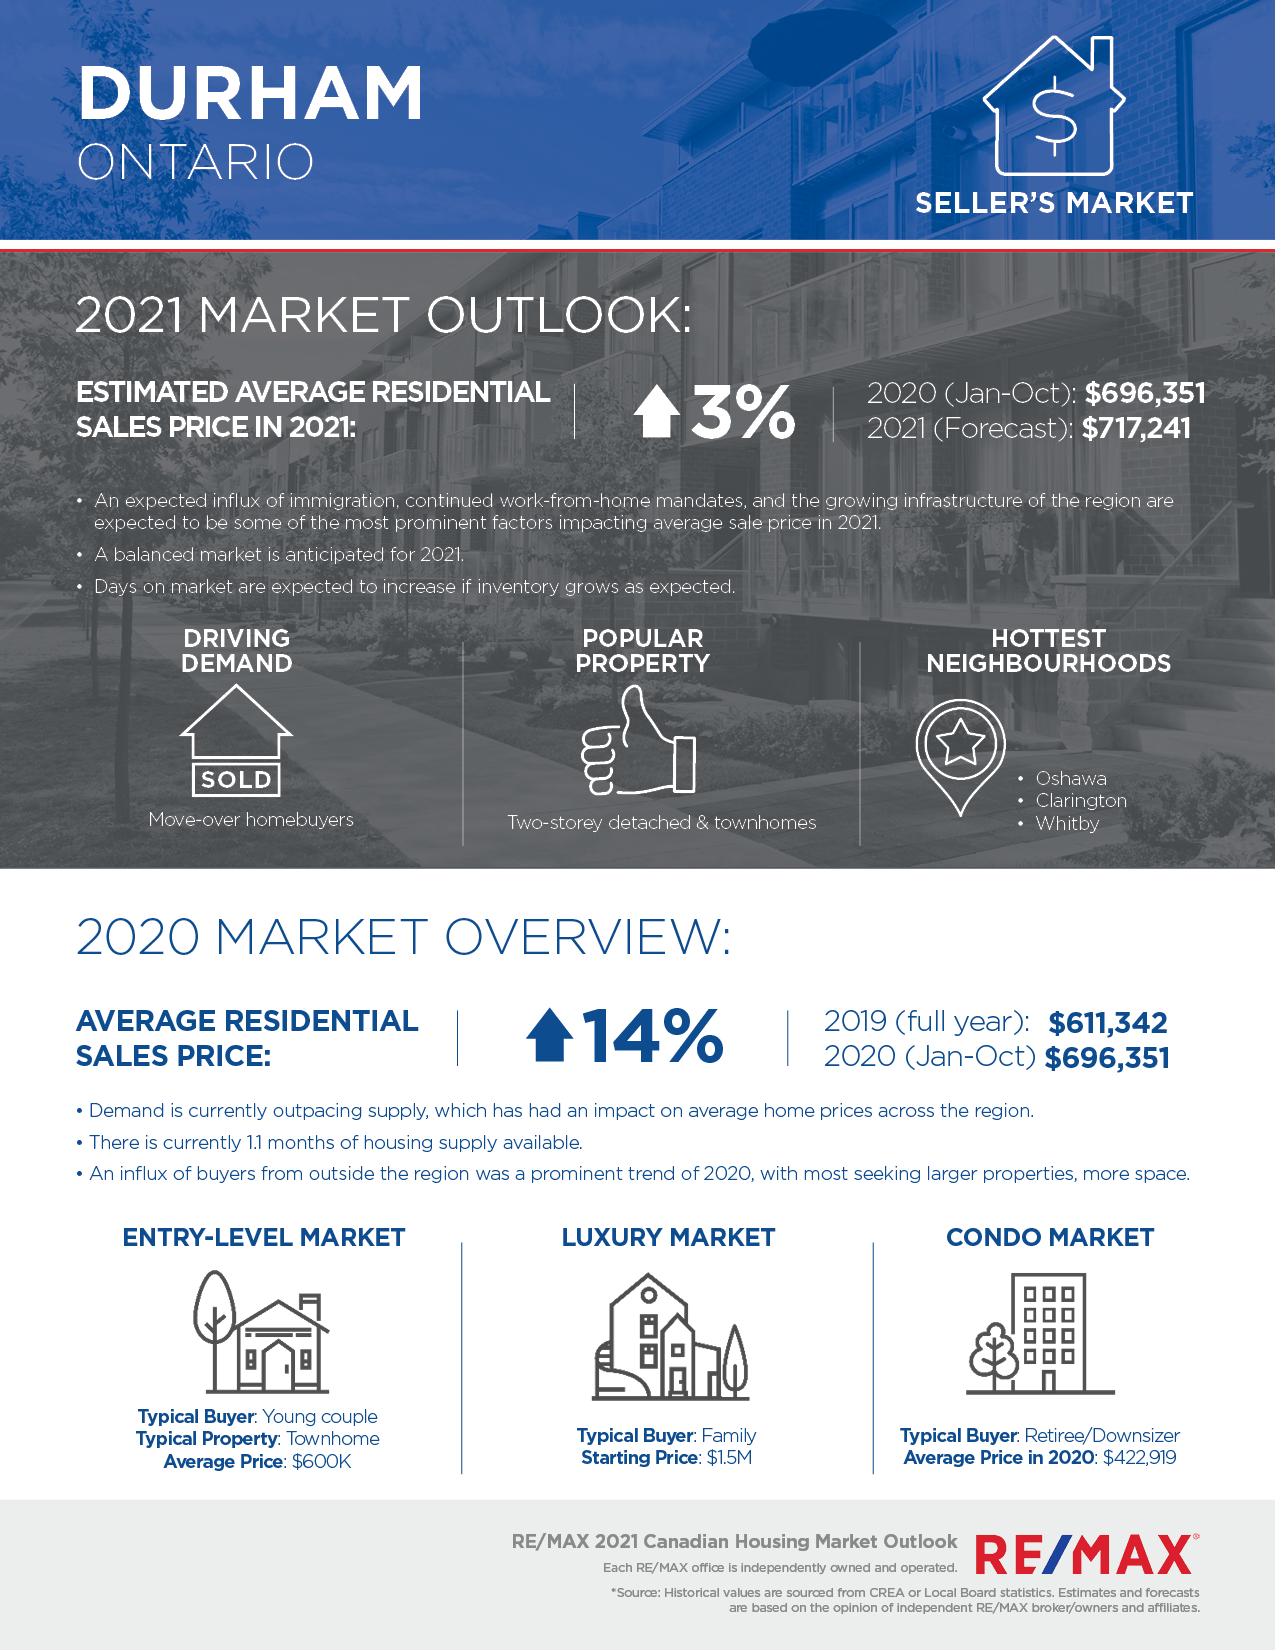 Durham Region - RE/MAX 2021 Canadian Housing Market Outlook